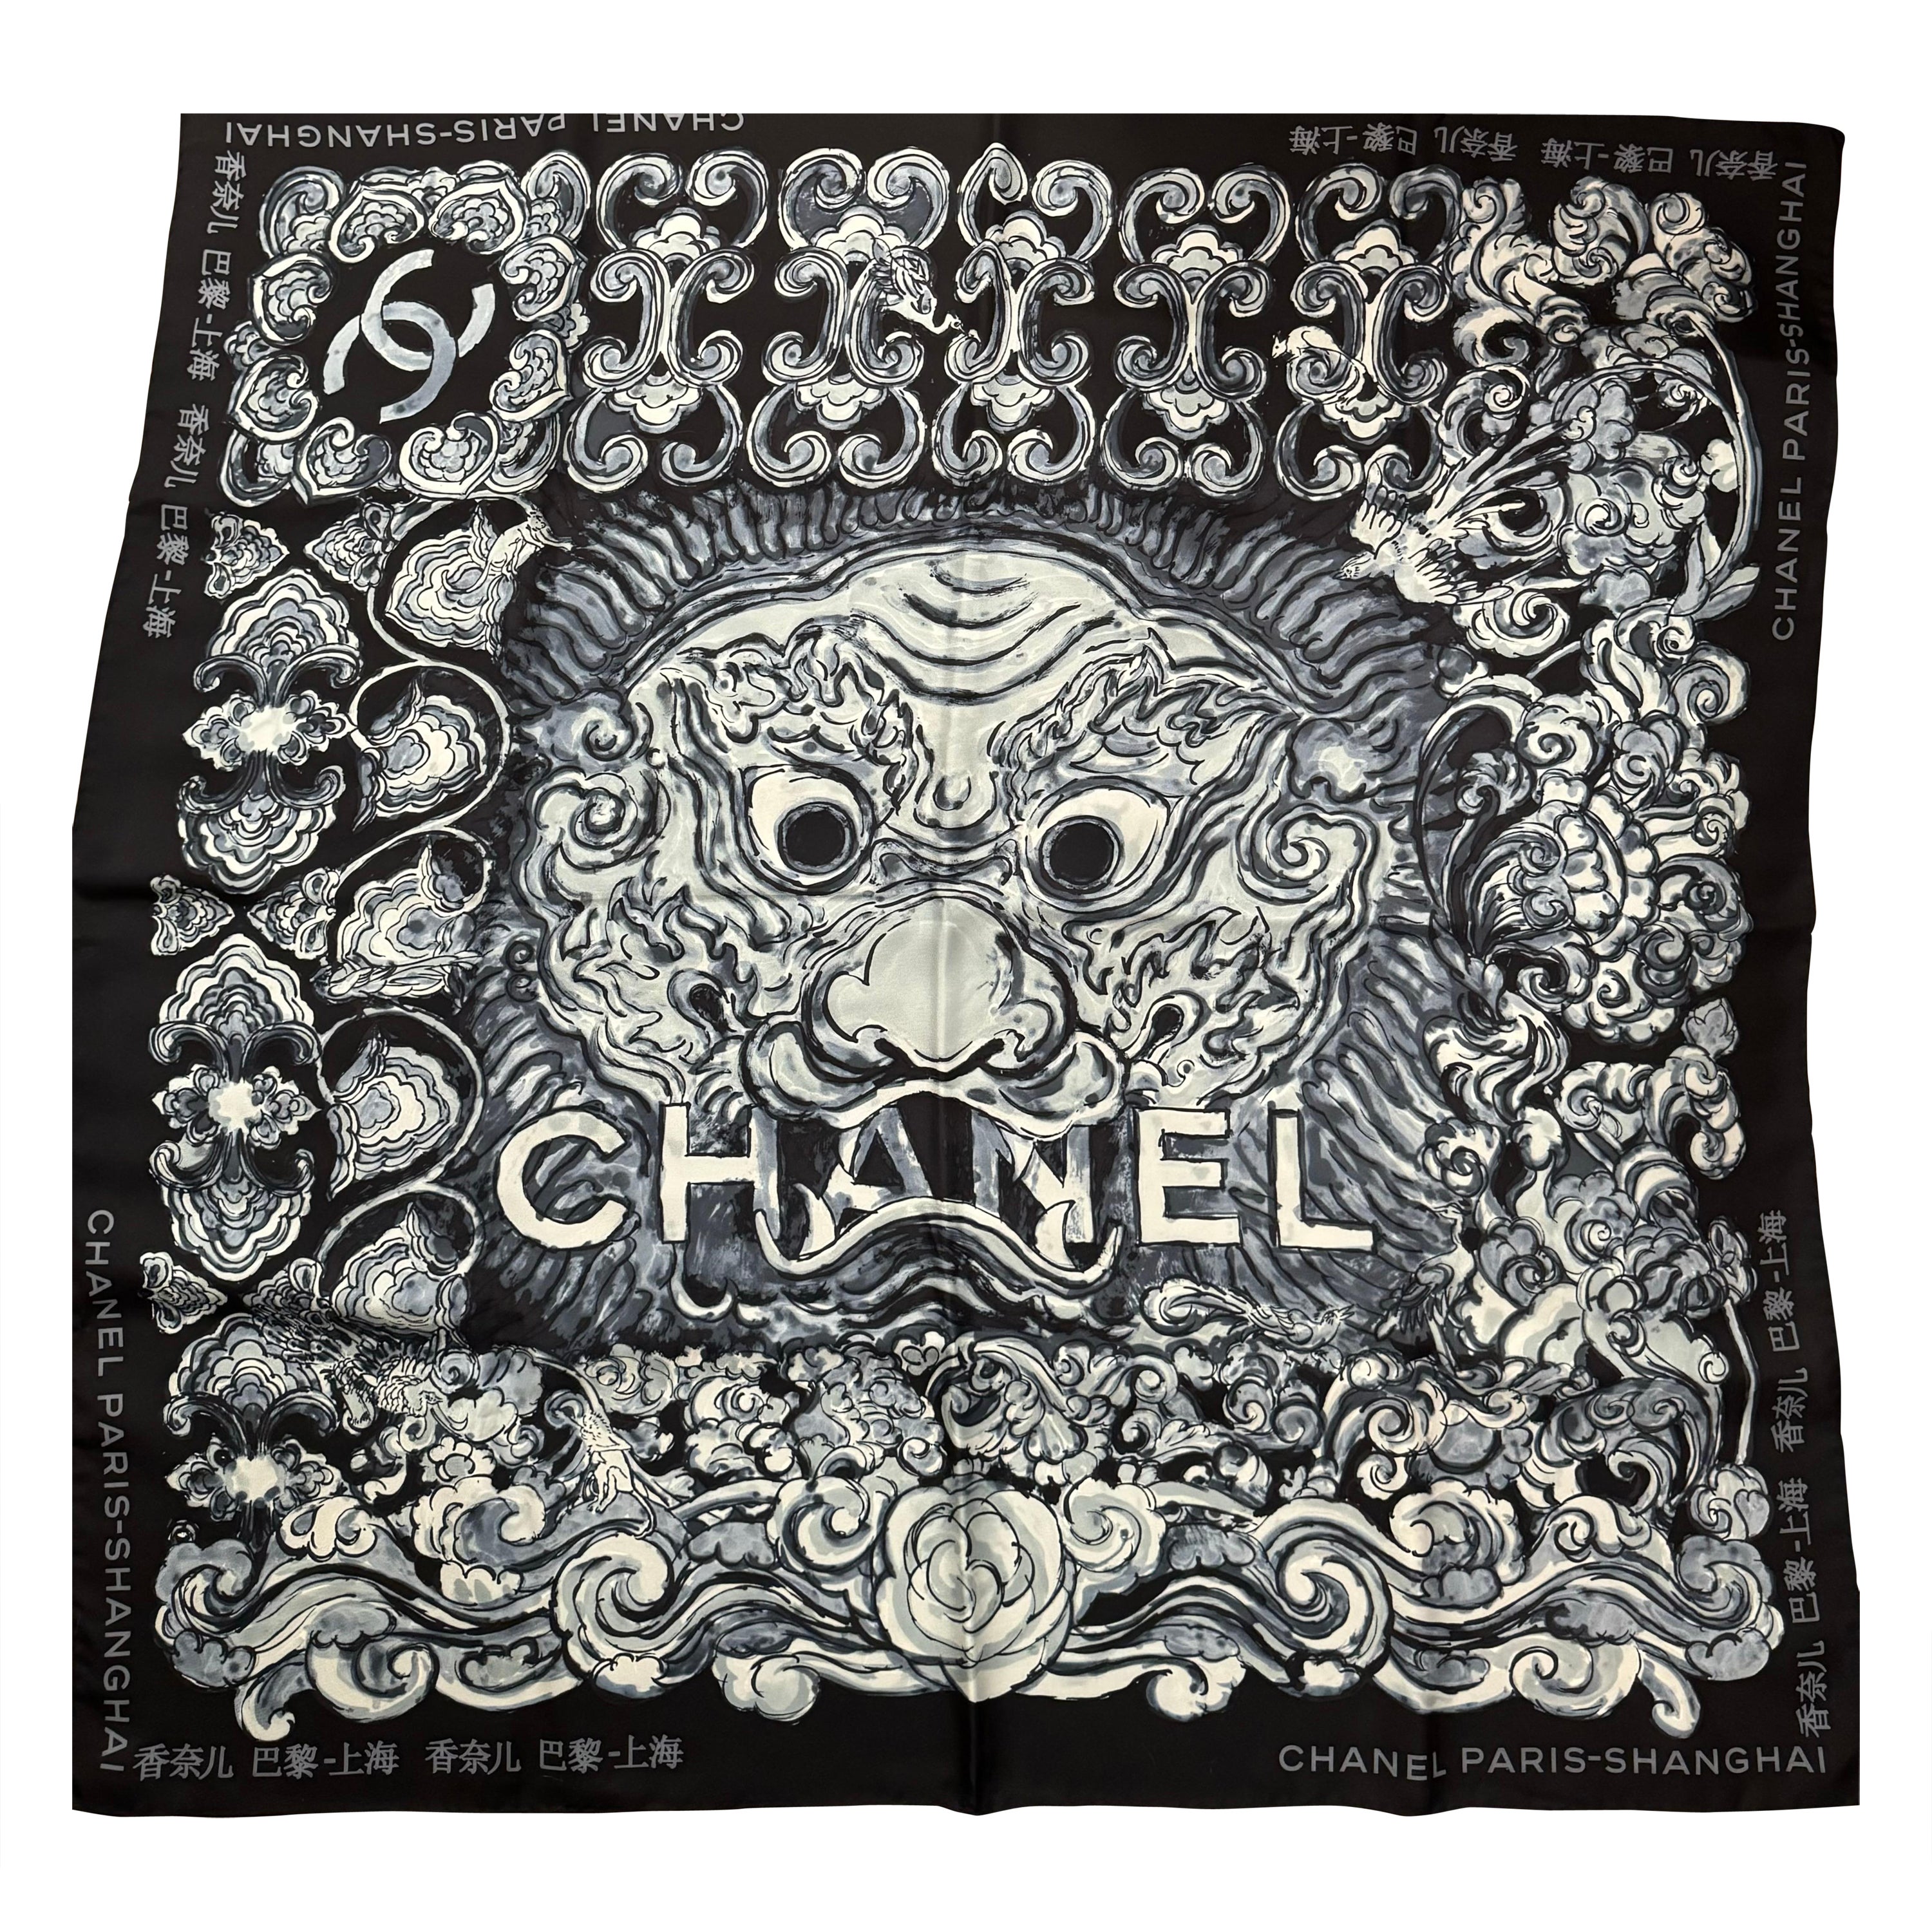 Rare Chanel Paris Shanghai 2010 silk scarf limited edition 